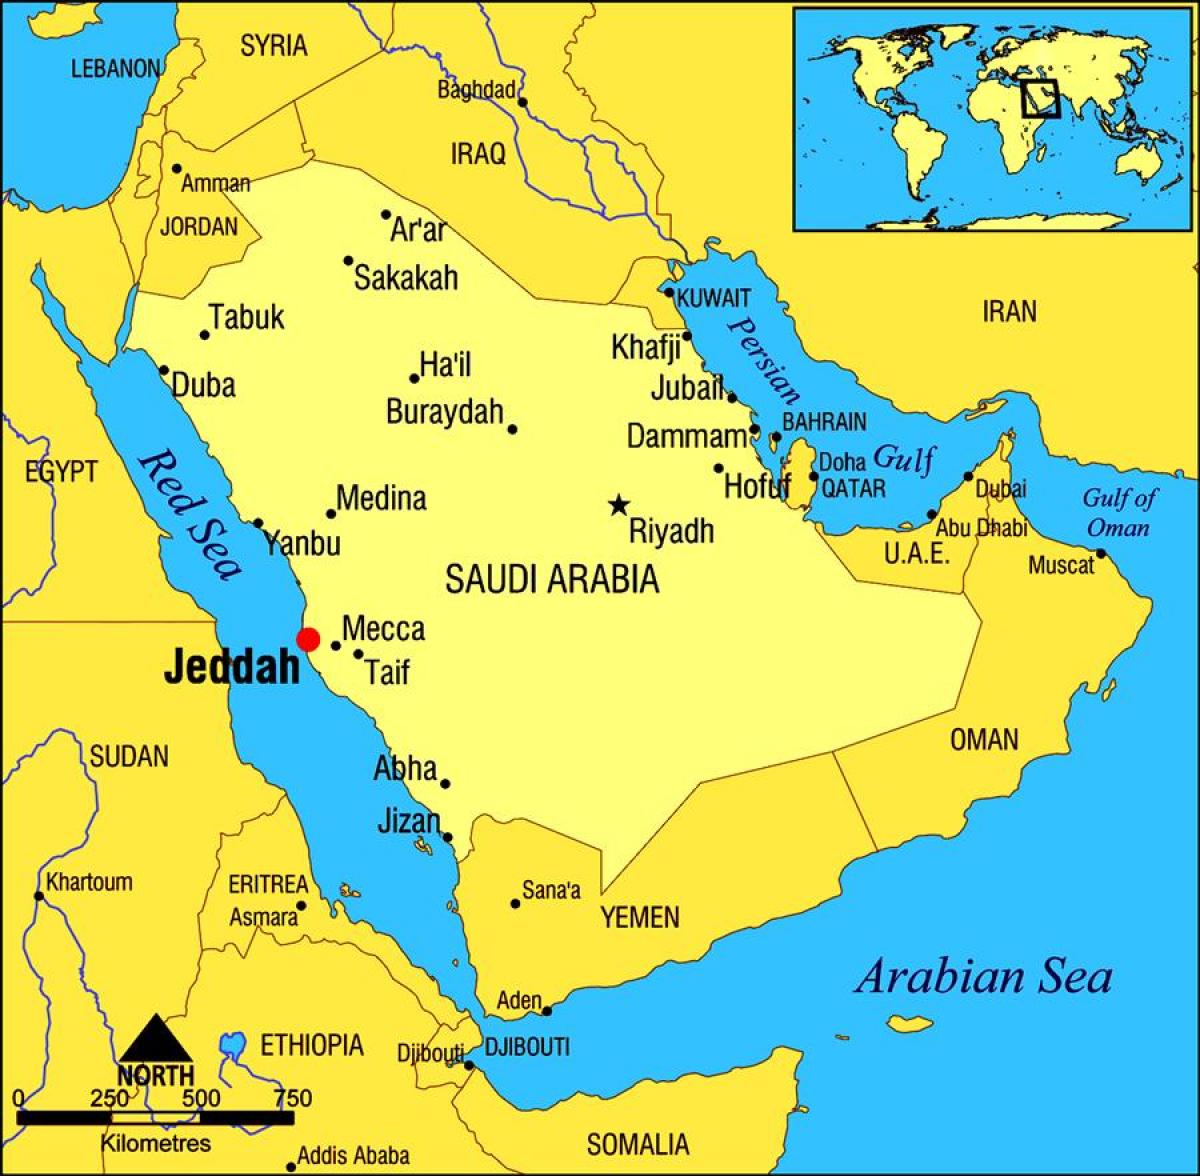 jeddah KSA газрын зураг